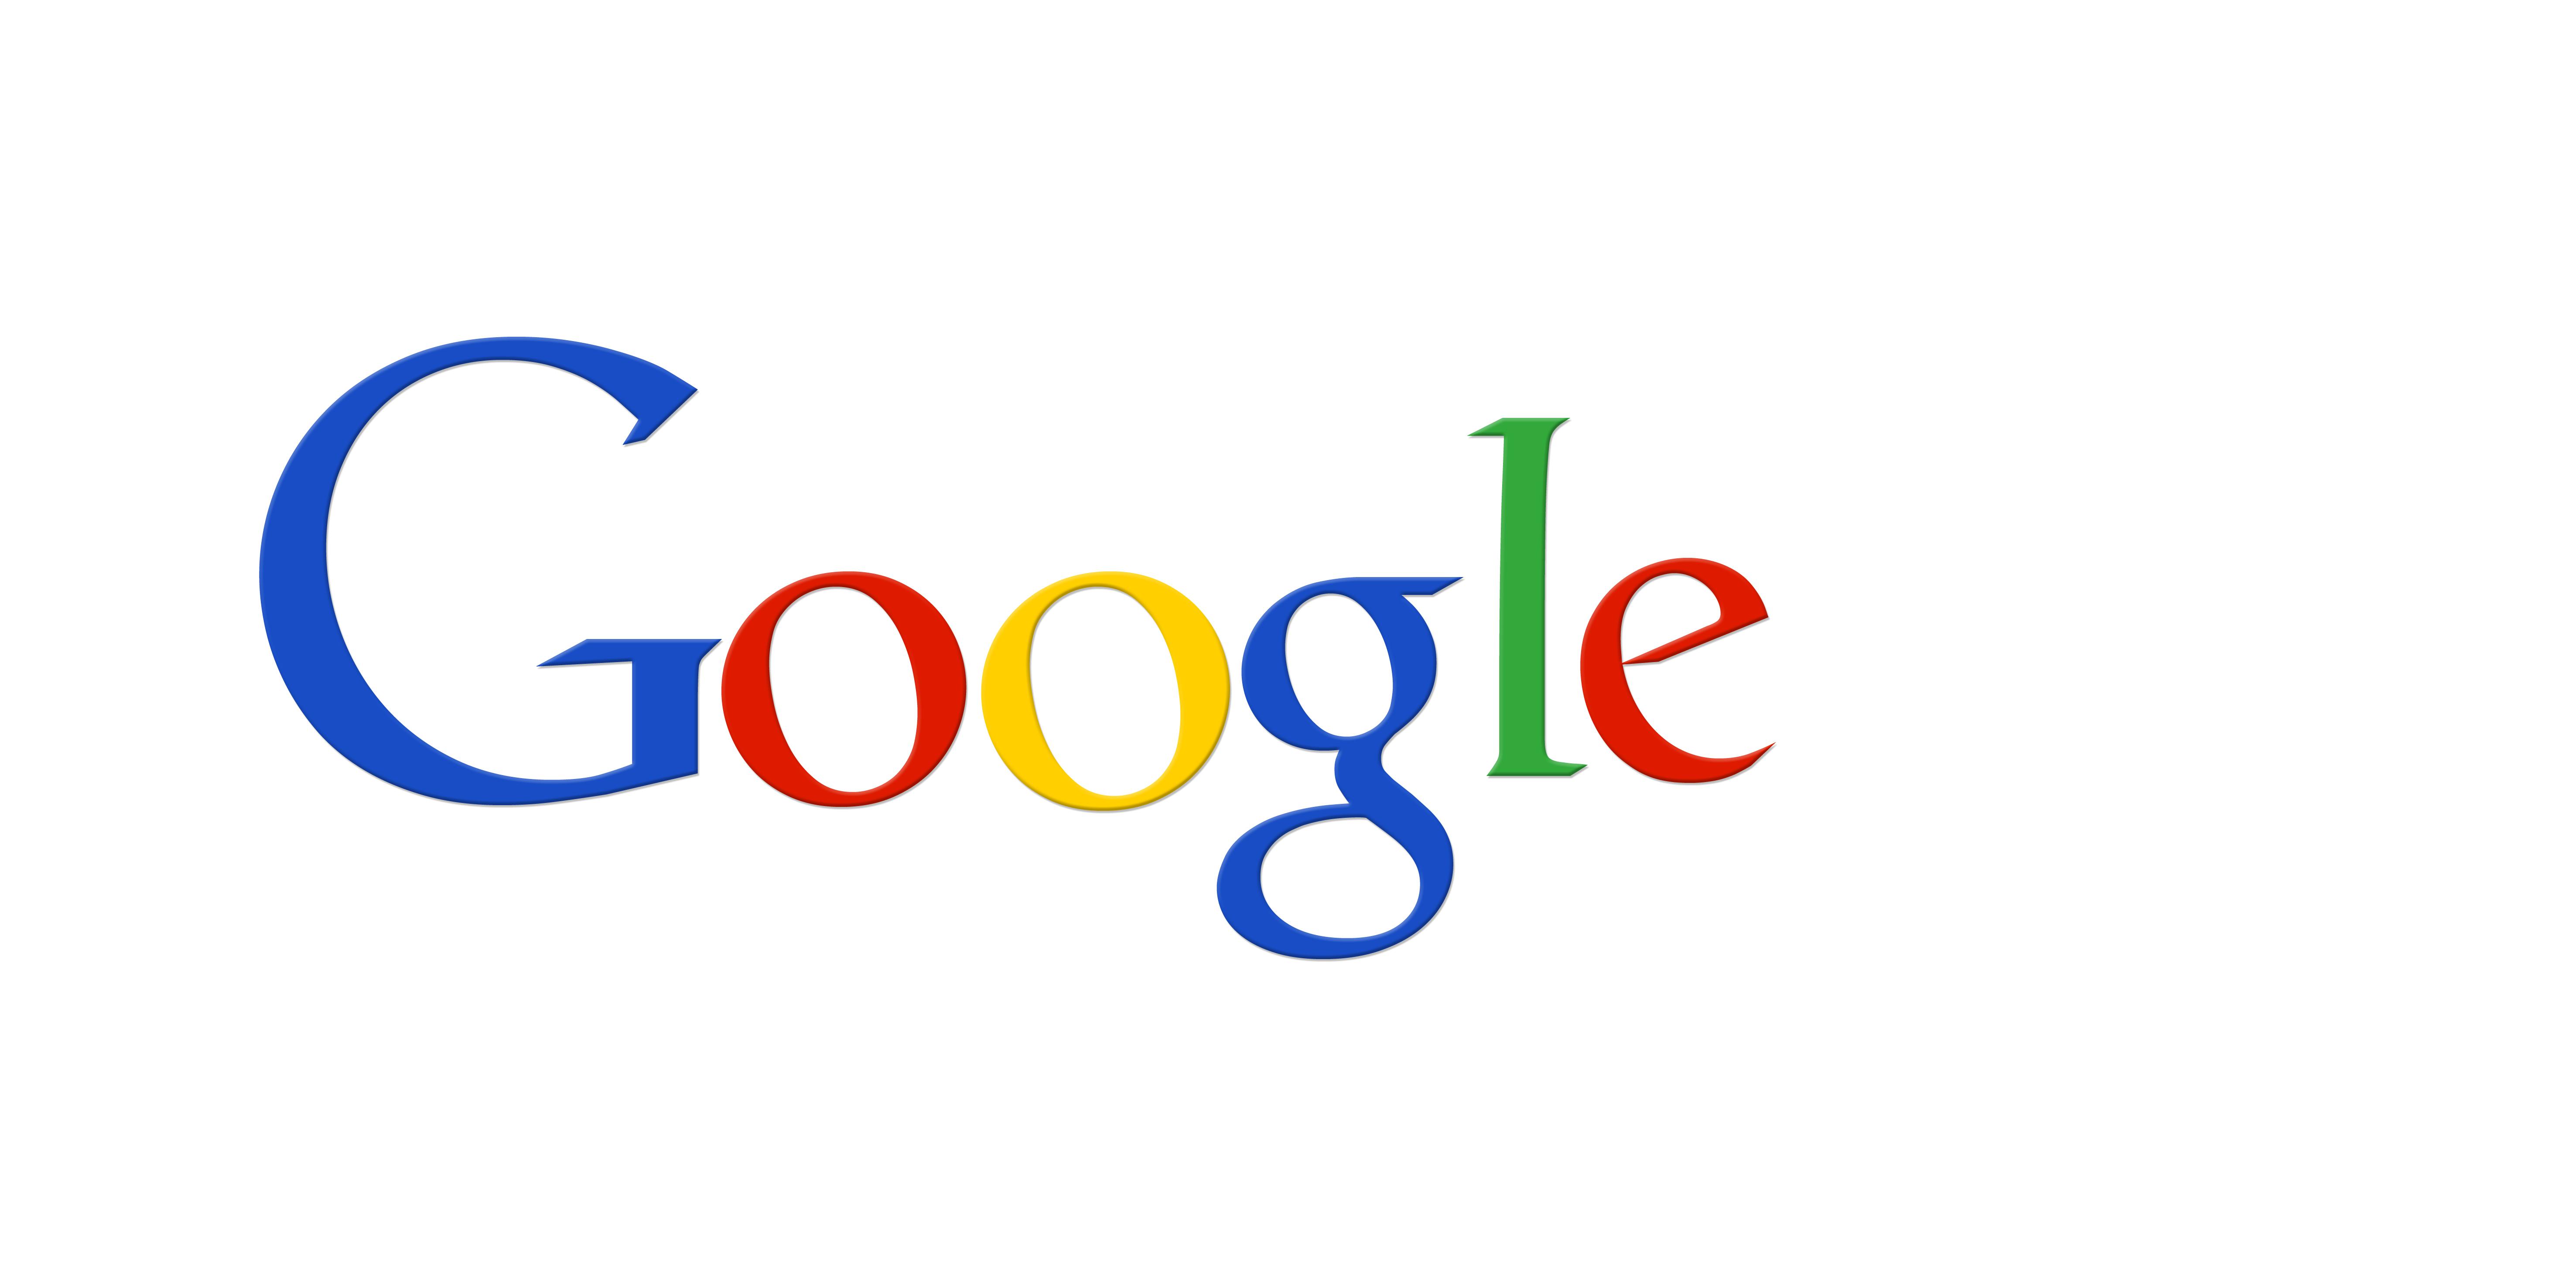 Google.com Logo - Google's Latest Trademark Bugaboo? | DuetsBlog